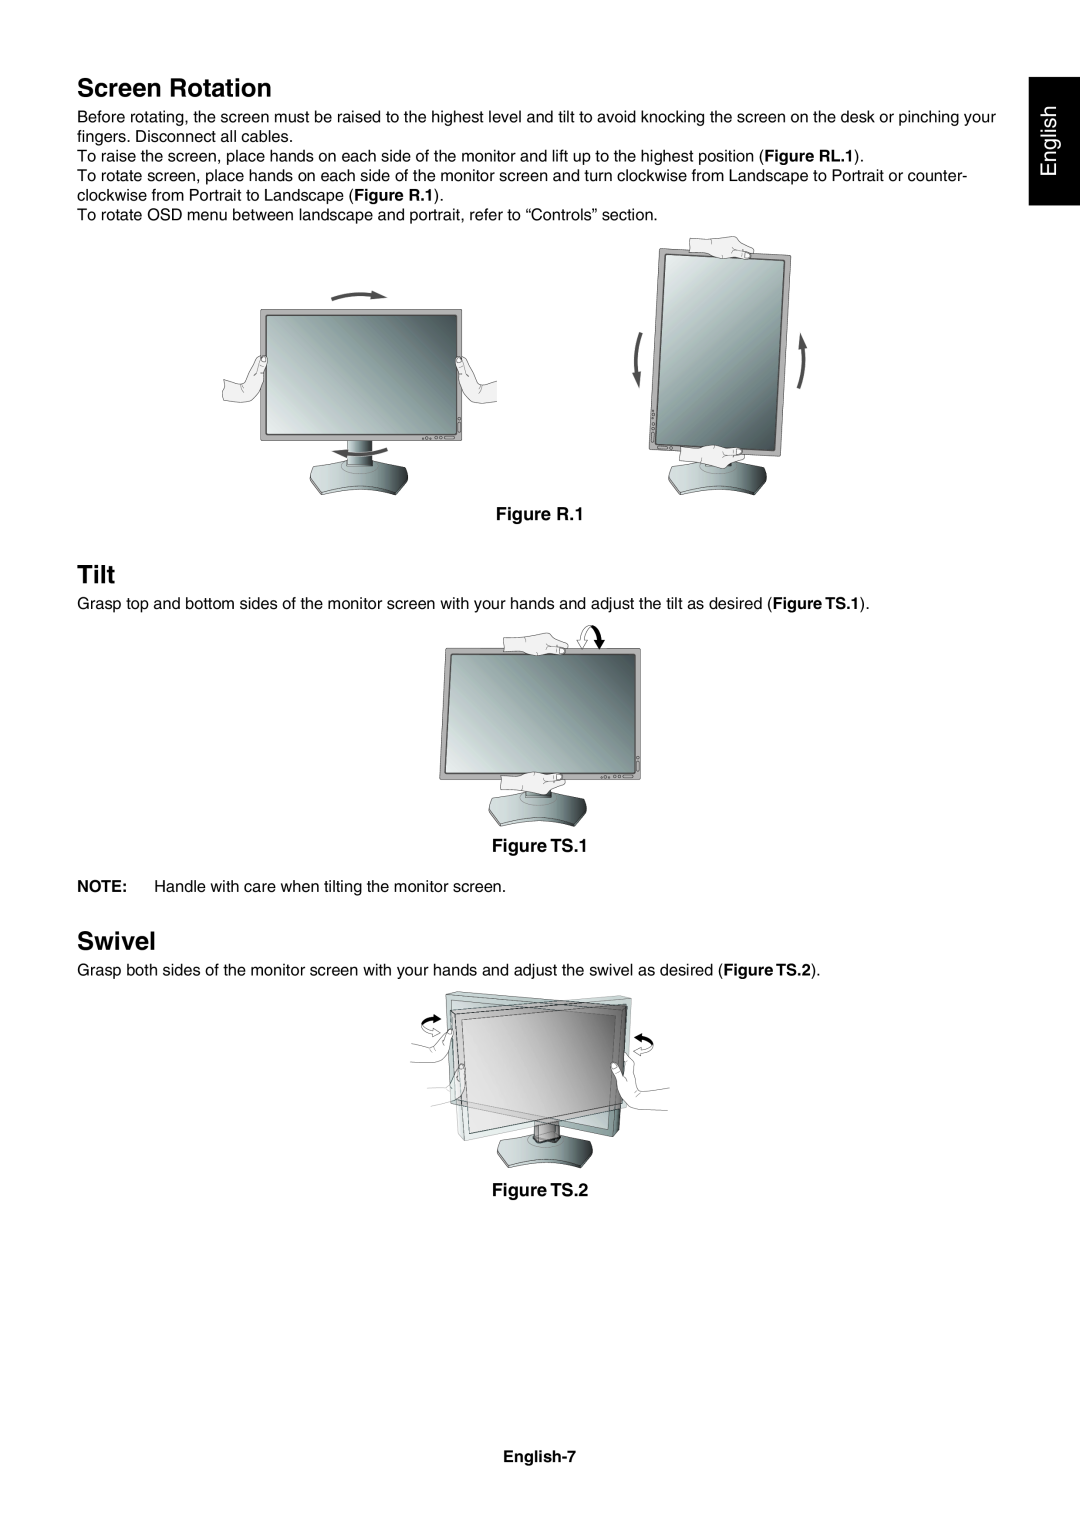 NEC PA271W user manual Screen Rotation, Tilt, Swivel, English, Figure R.1, Figure TS.1, Figure TS.2 